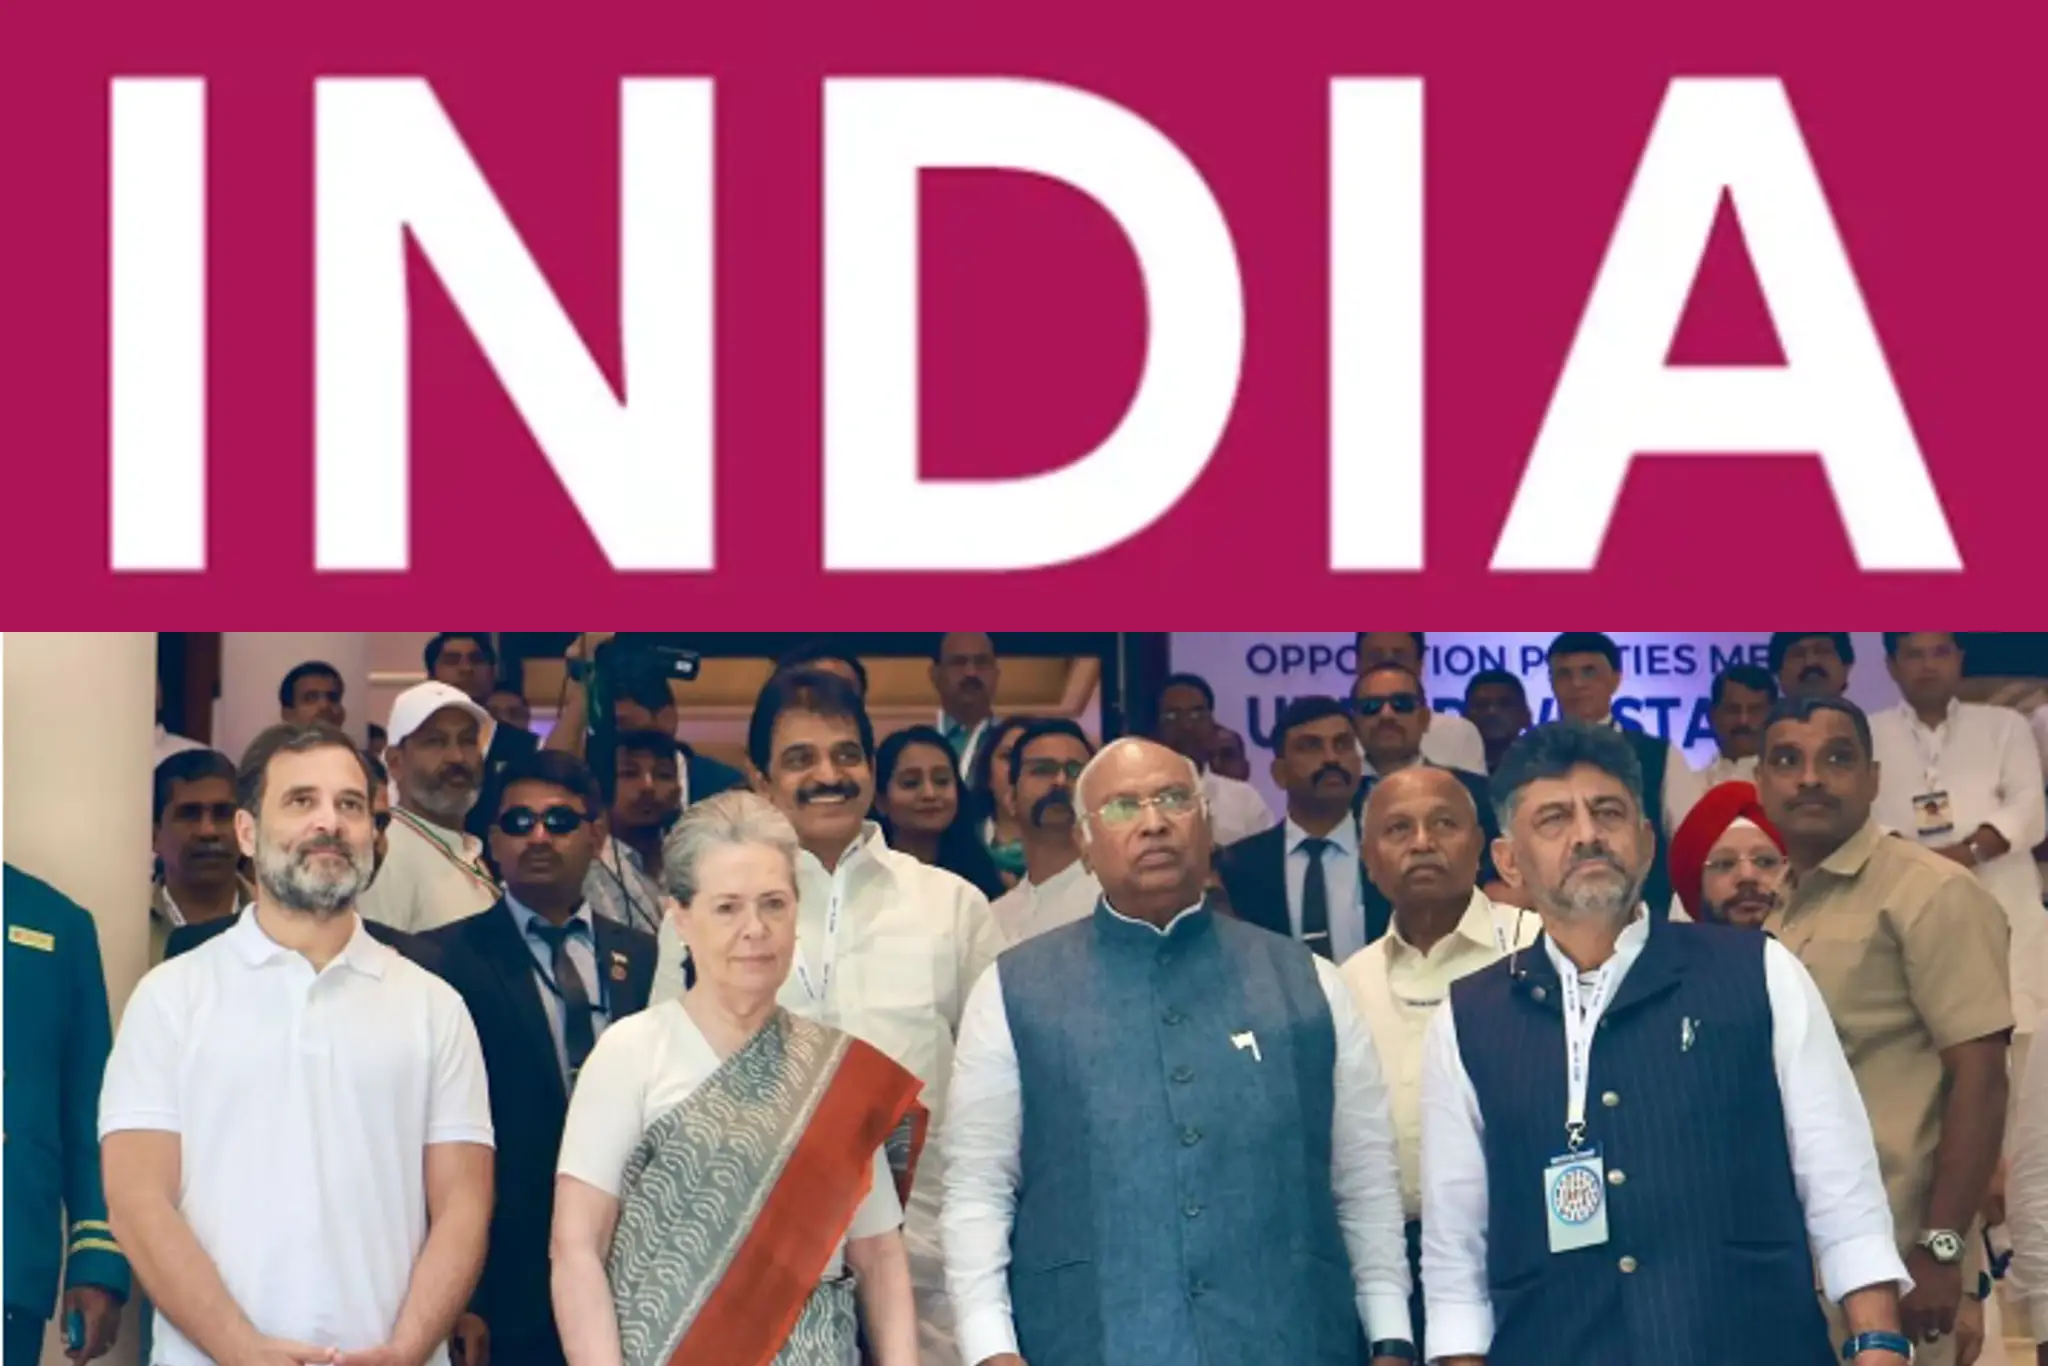 INDIA Alliance